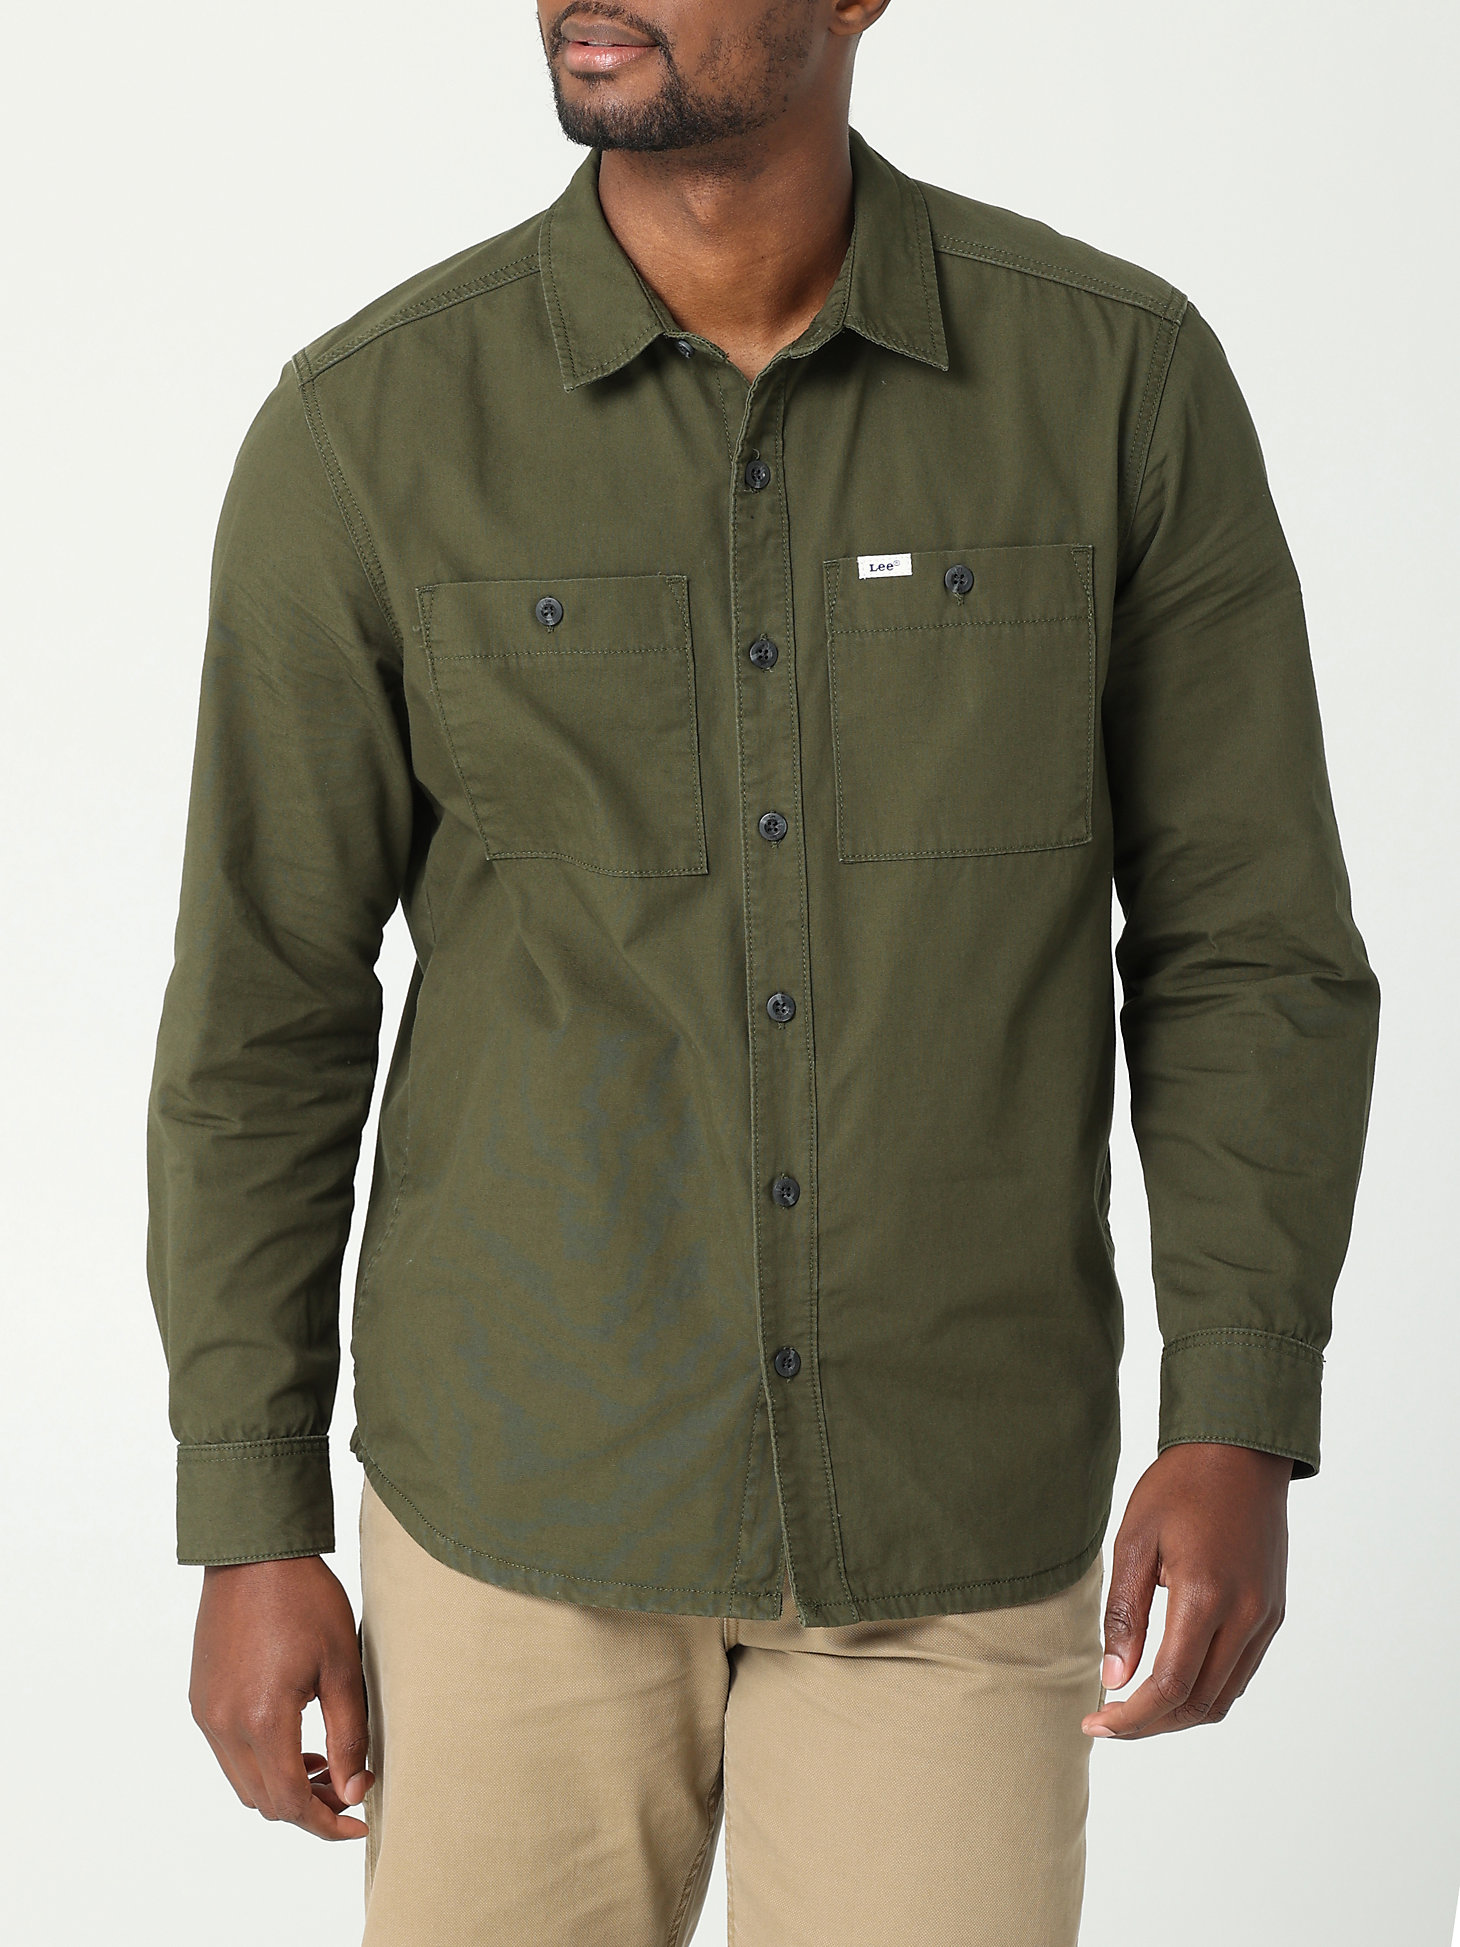 Men's Workwear Solid Overshirt in Kale main view